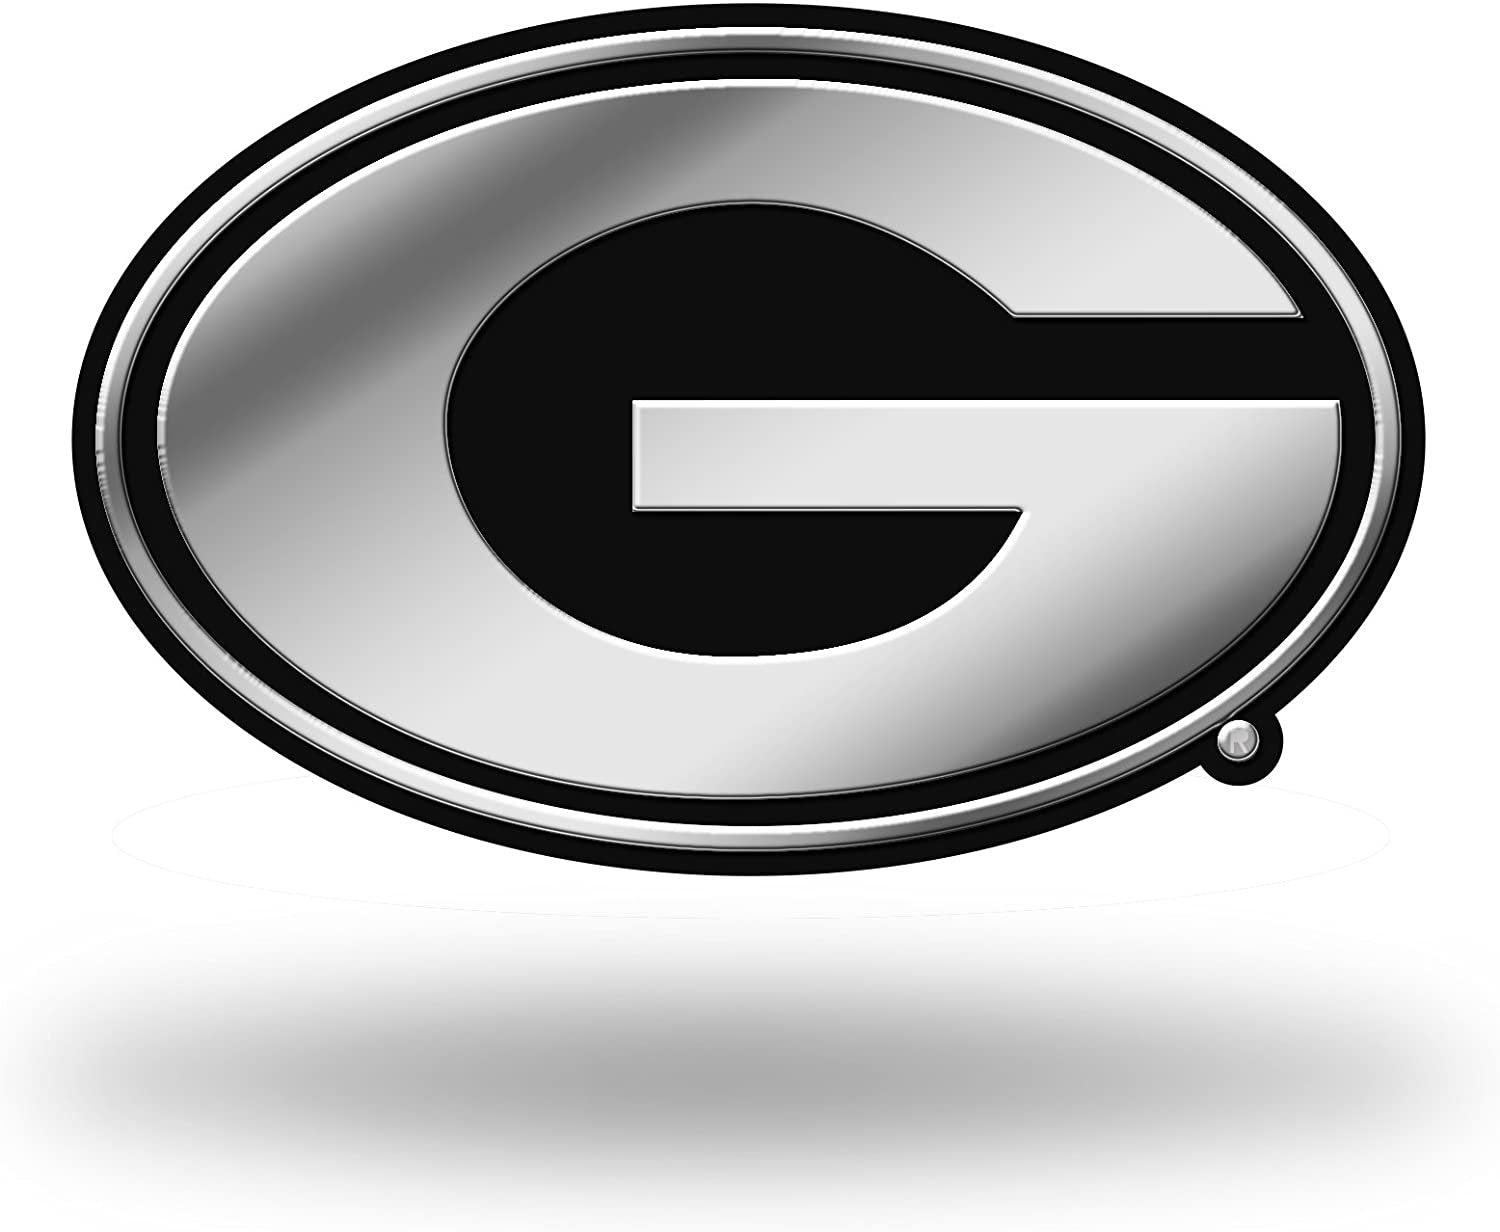 University of Georgia Bulldogs Auto Emblem, Silver Chrome Color, Raised Molded Plastic, 3.5 Inch, Adhesive Tape Backing